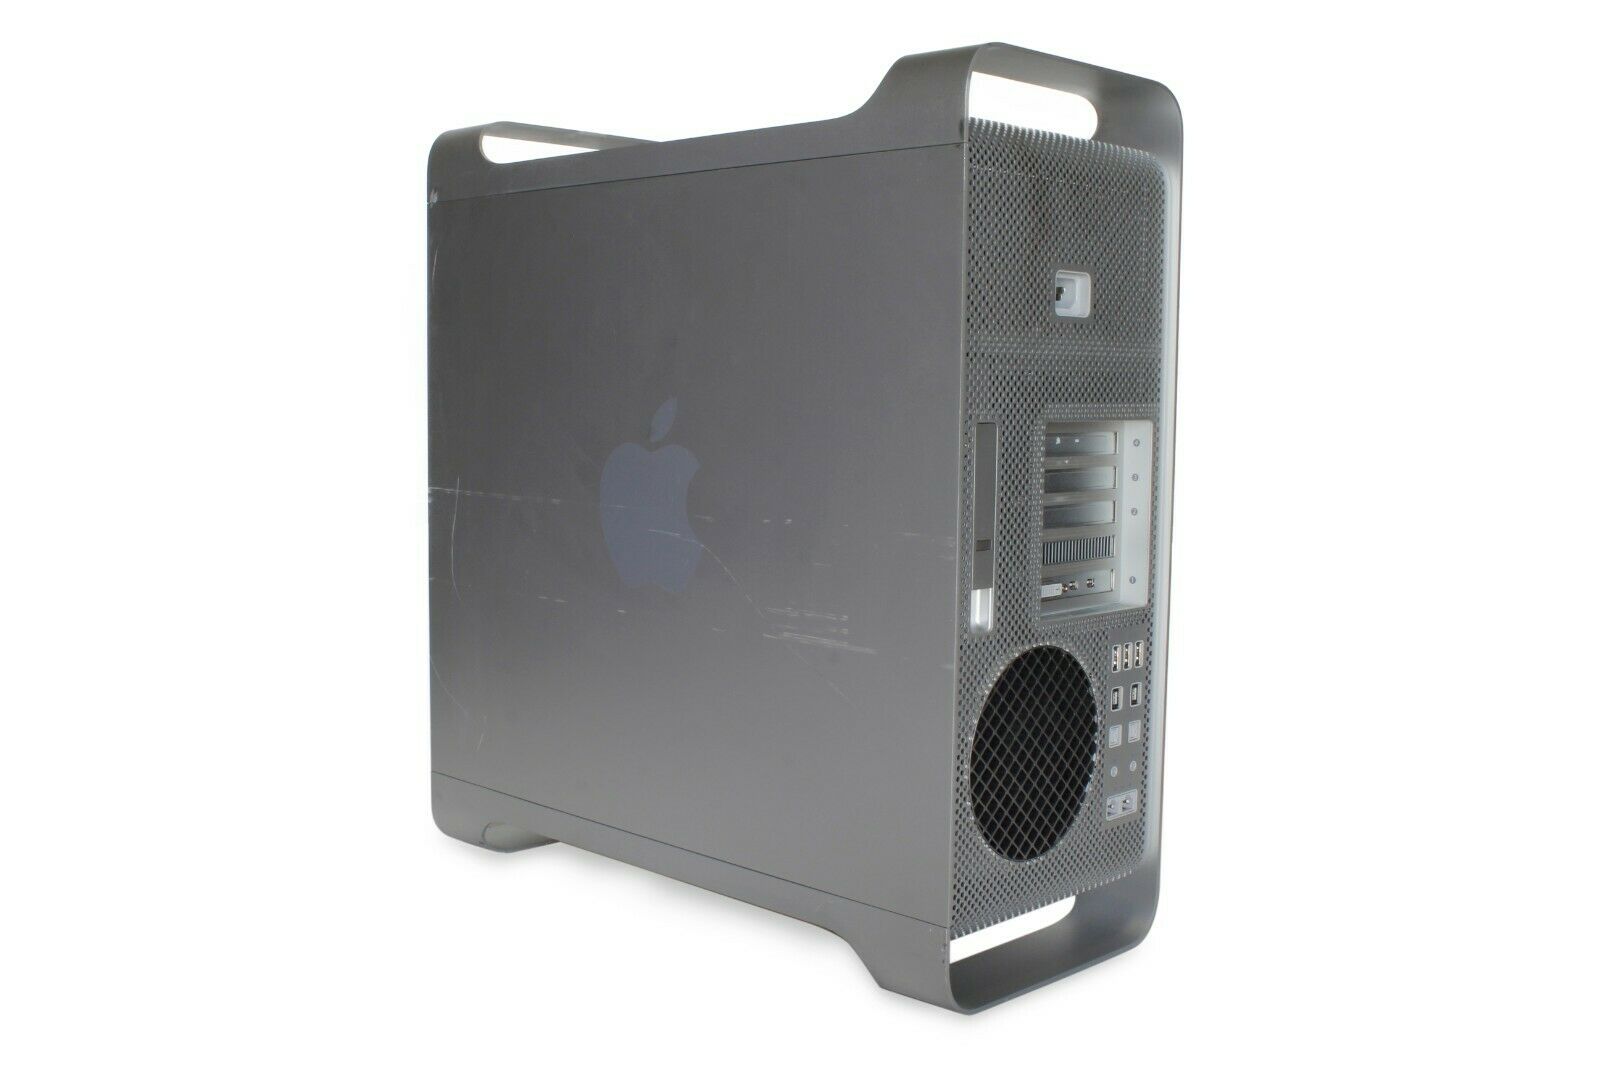 Apple Mac Pro 2x 2.4GHz Six-Core (12 Cores) Xeon (Mid 2012 